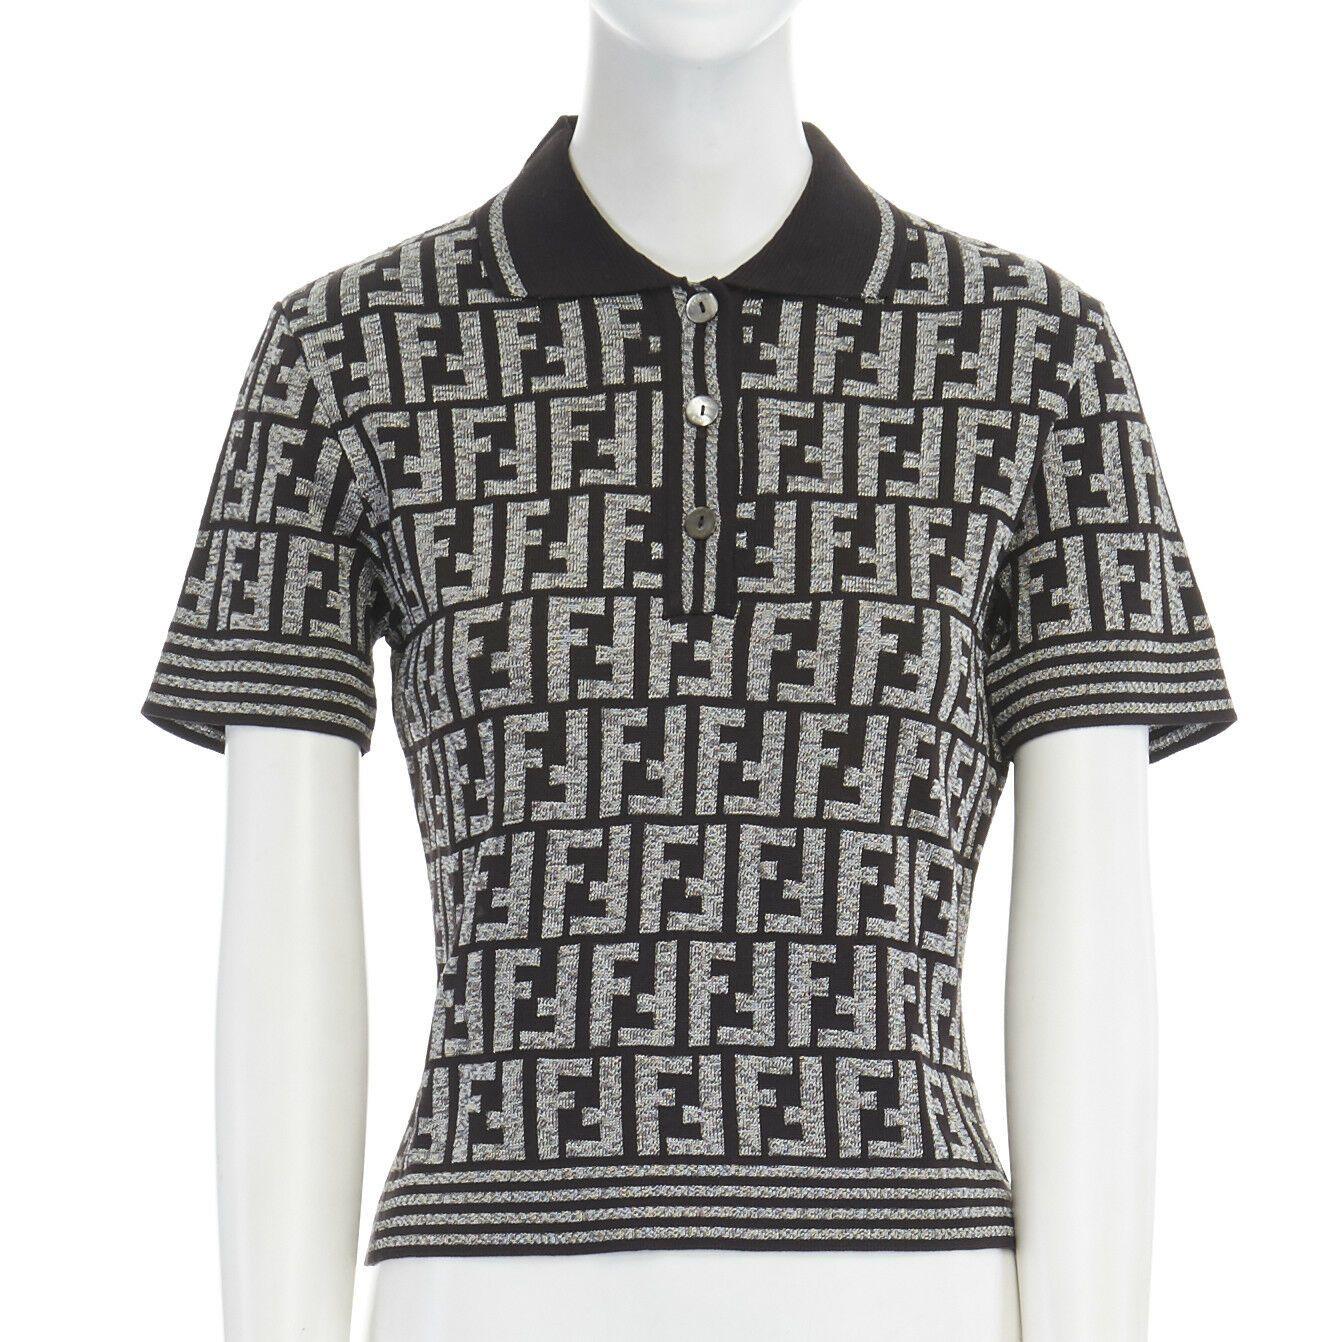 9.5/10 XS Authentiek Vintage Fendi zucca shirtConditie Kleding Meisjeskleding Tops & T-shirts T-shirts T-shirts met print 